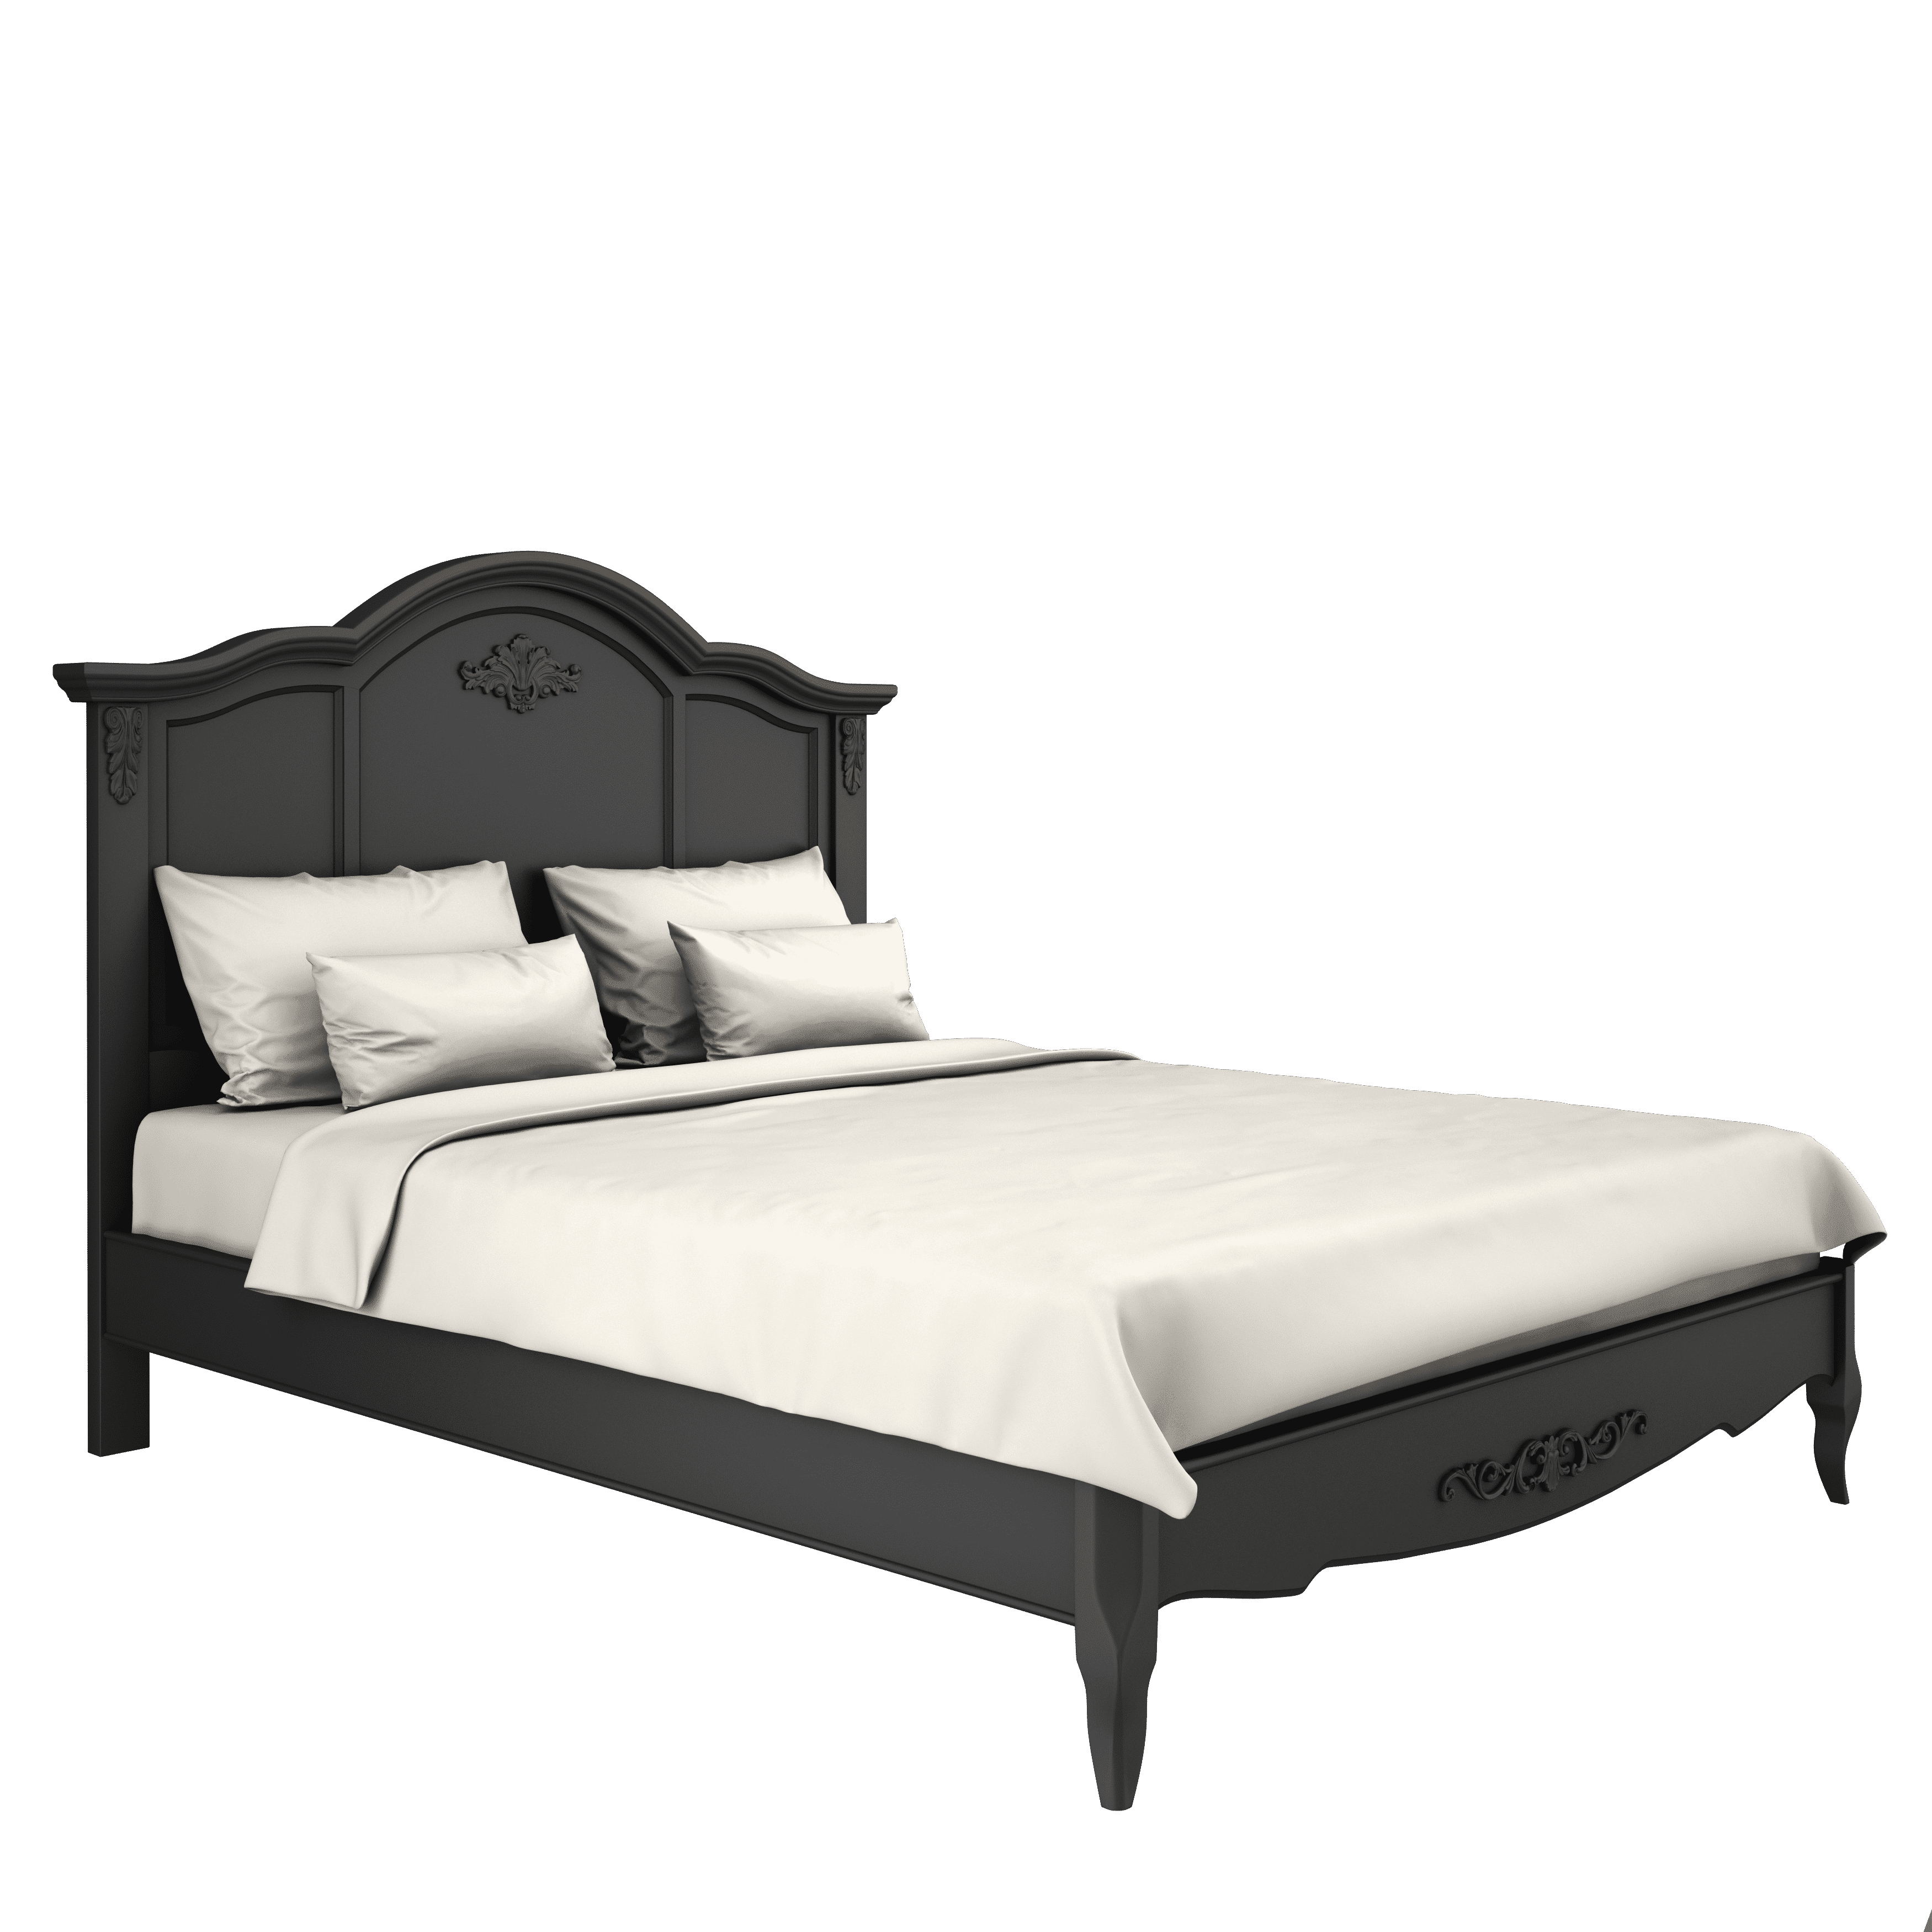 Кровать Aletan Provence, двуспальная, 180x200 см, цвет: черный, размер 198х211х129 см (B208BL)B208BL